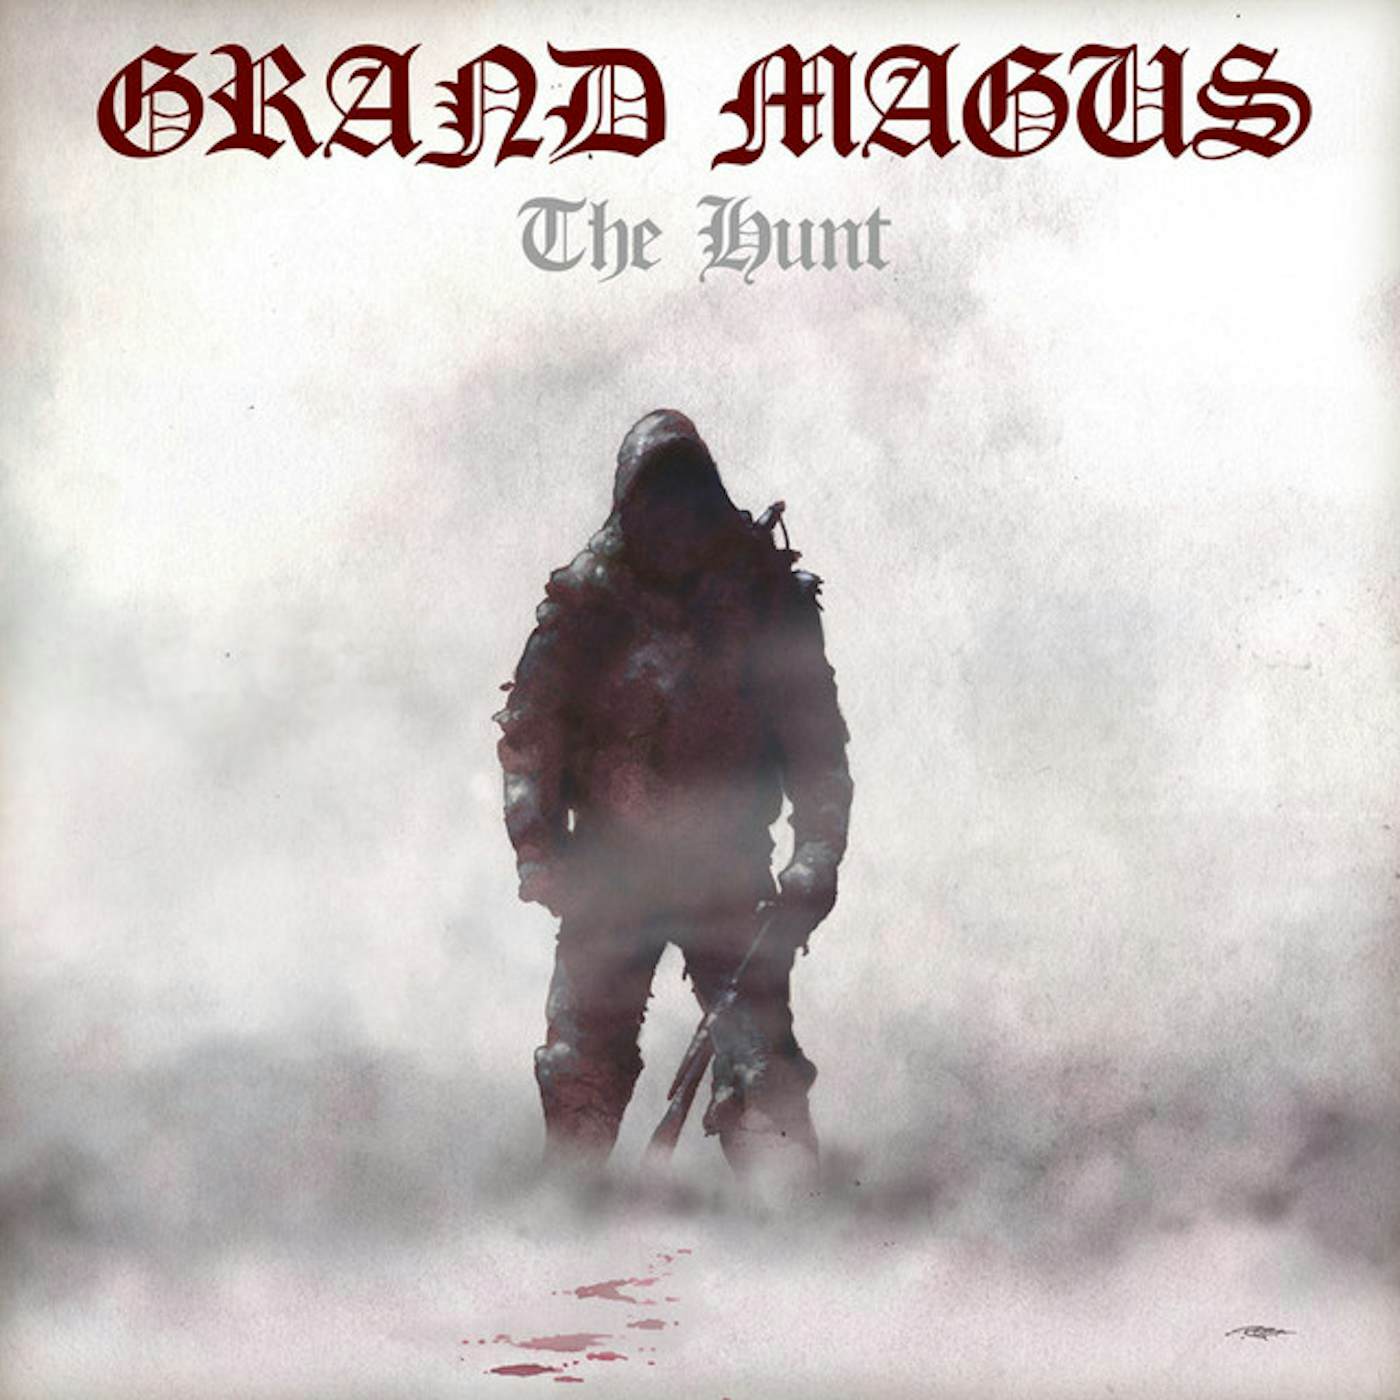 Grand Magus HUNT Vinyl Record